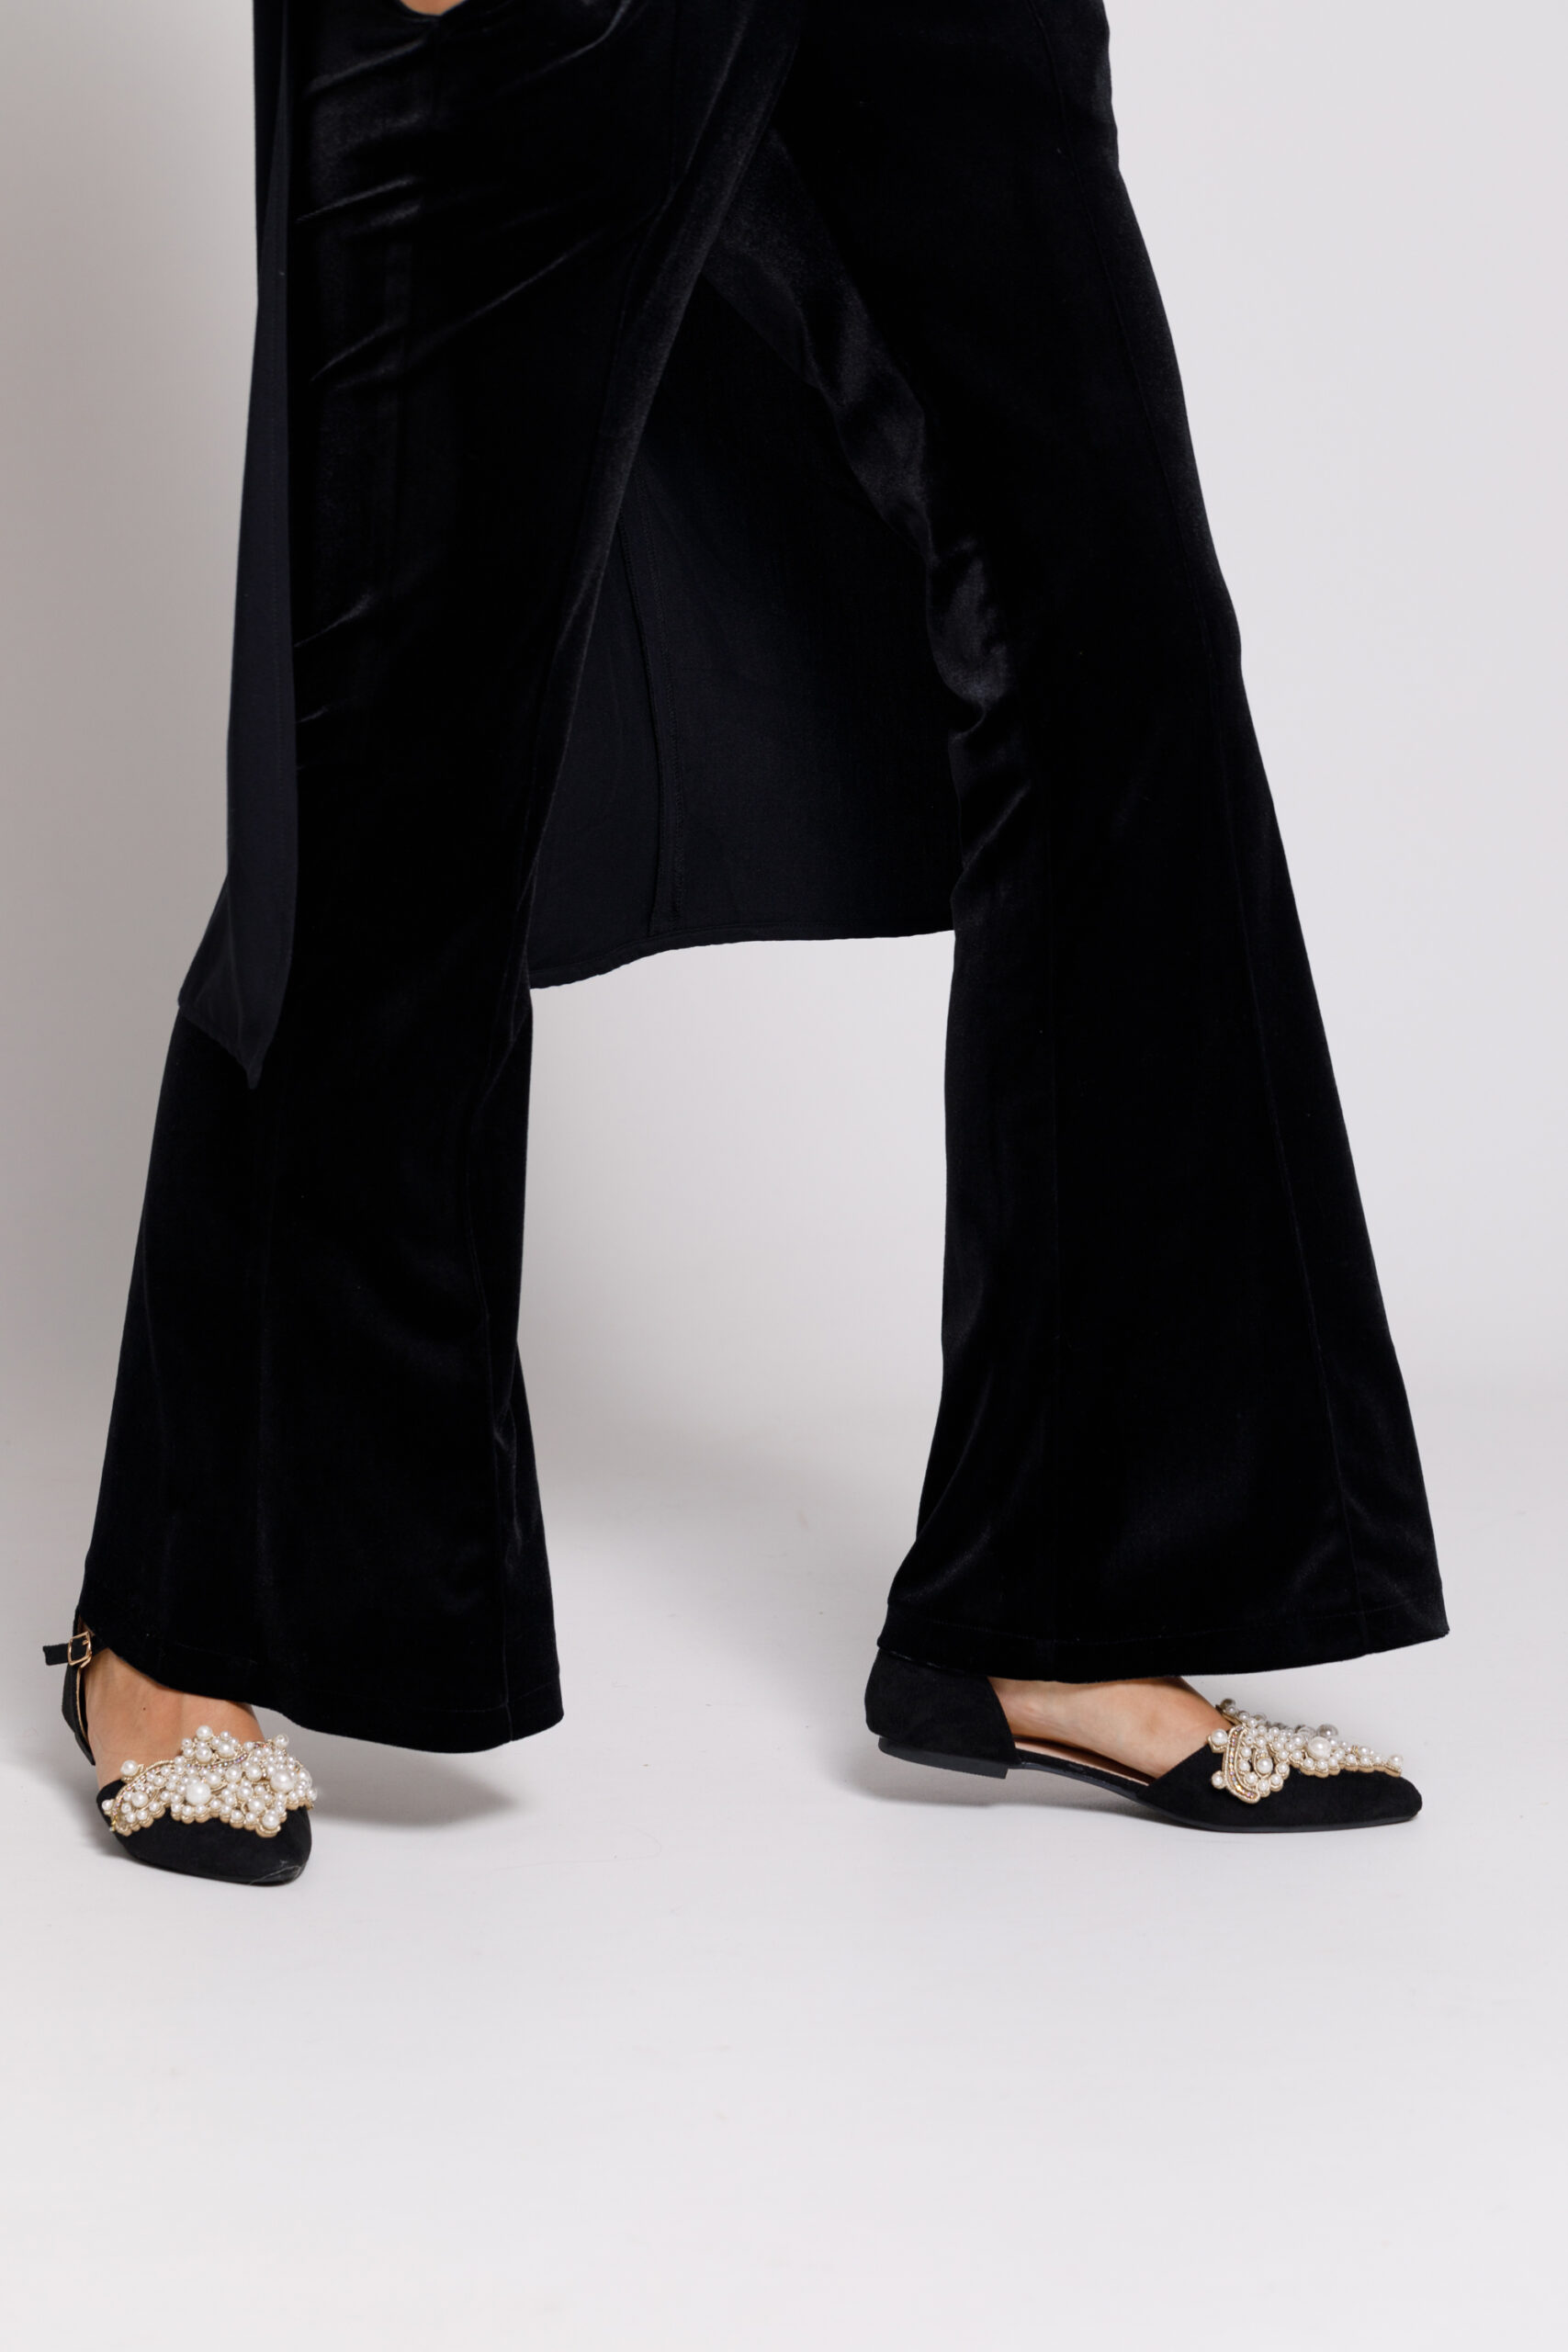 Pantalon ENNIS din catifea neagra evazati. Materiale naturale, design unicat, cu broderie si aplicatii handmade